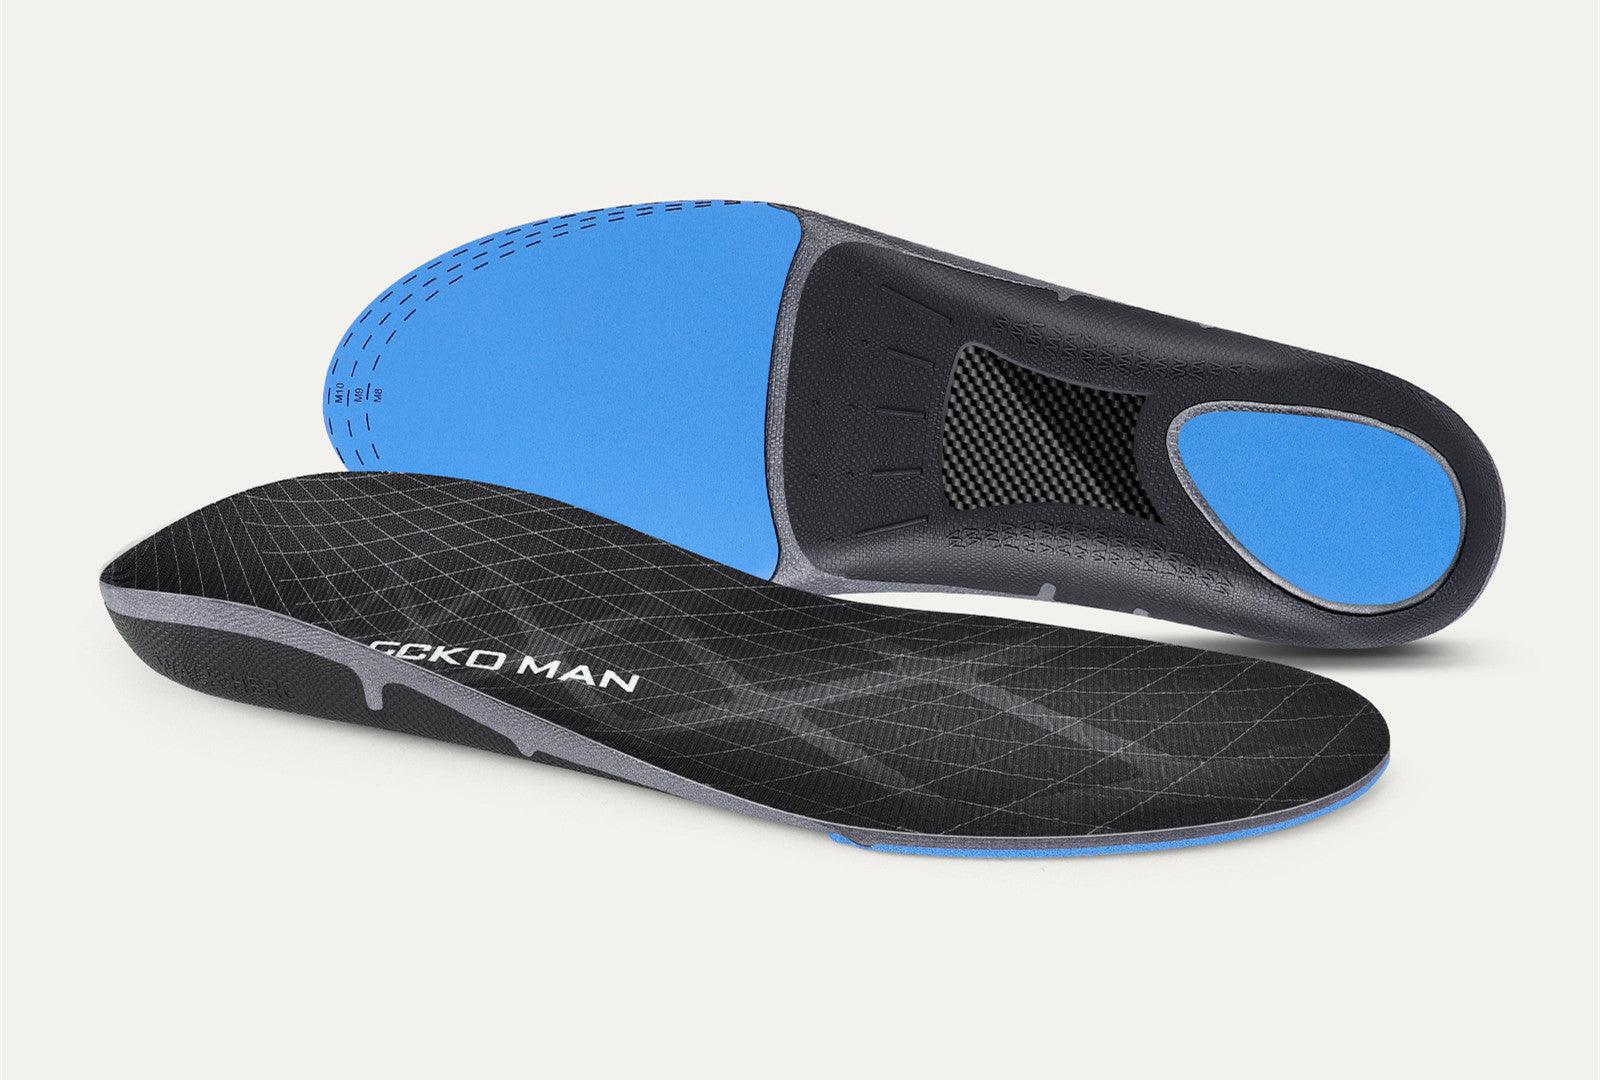 Why Geckoman Carbon Fiber Orthotics Insoles Can help Relief Foot Pain? - GECKOMAN